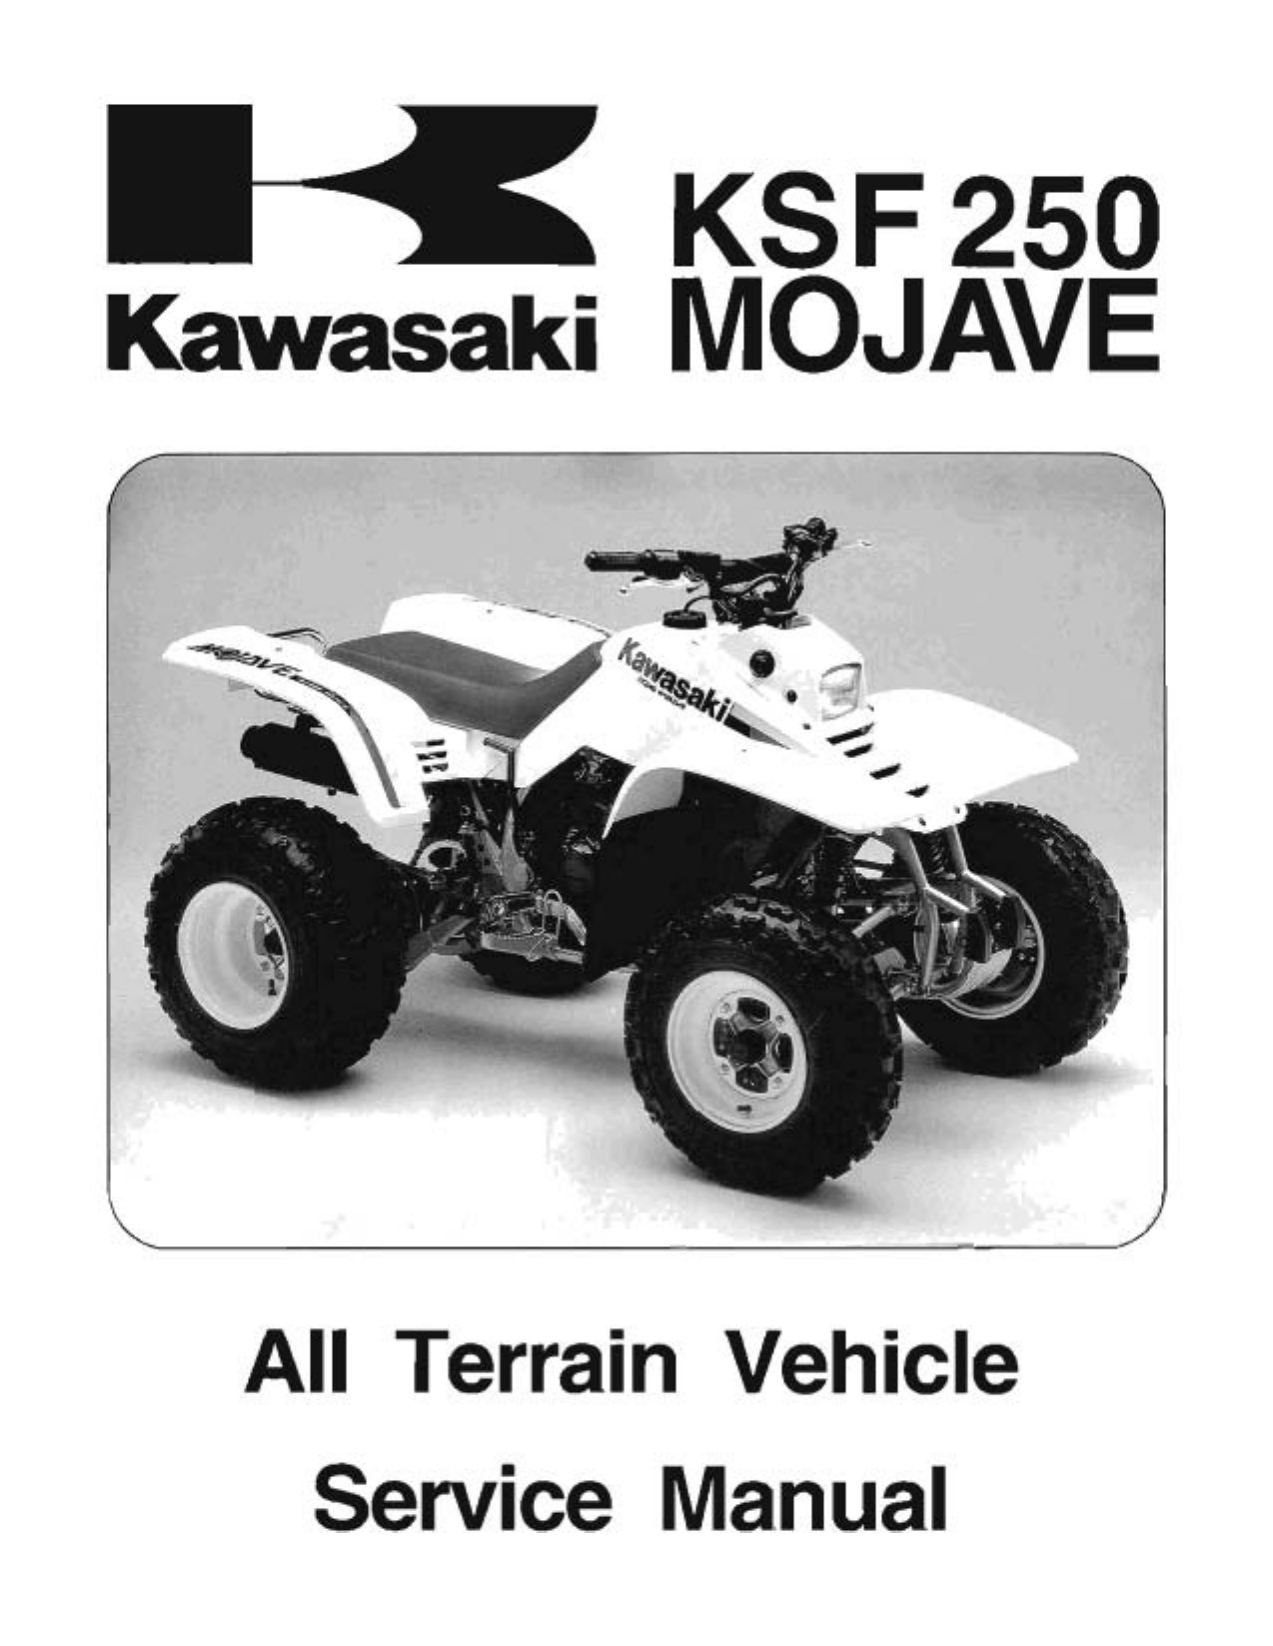 1987-2004 Kawasaki Mojave 250 R, KSF250 service manual Preview image 1